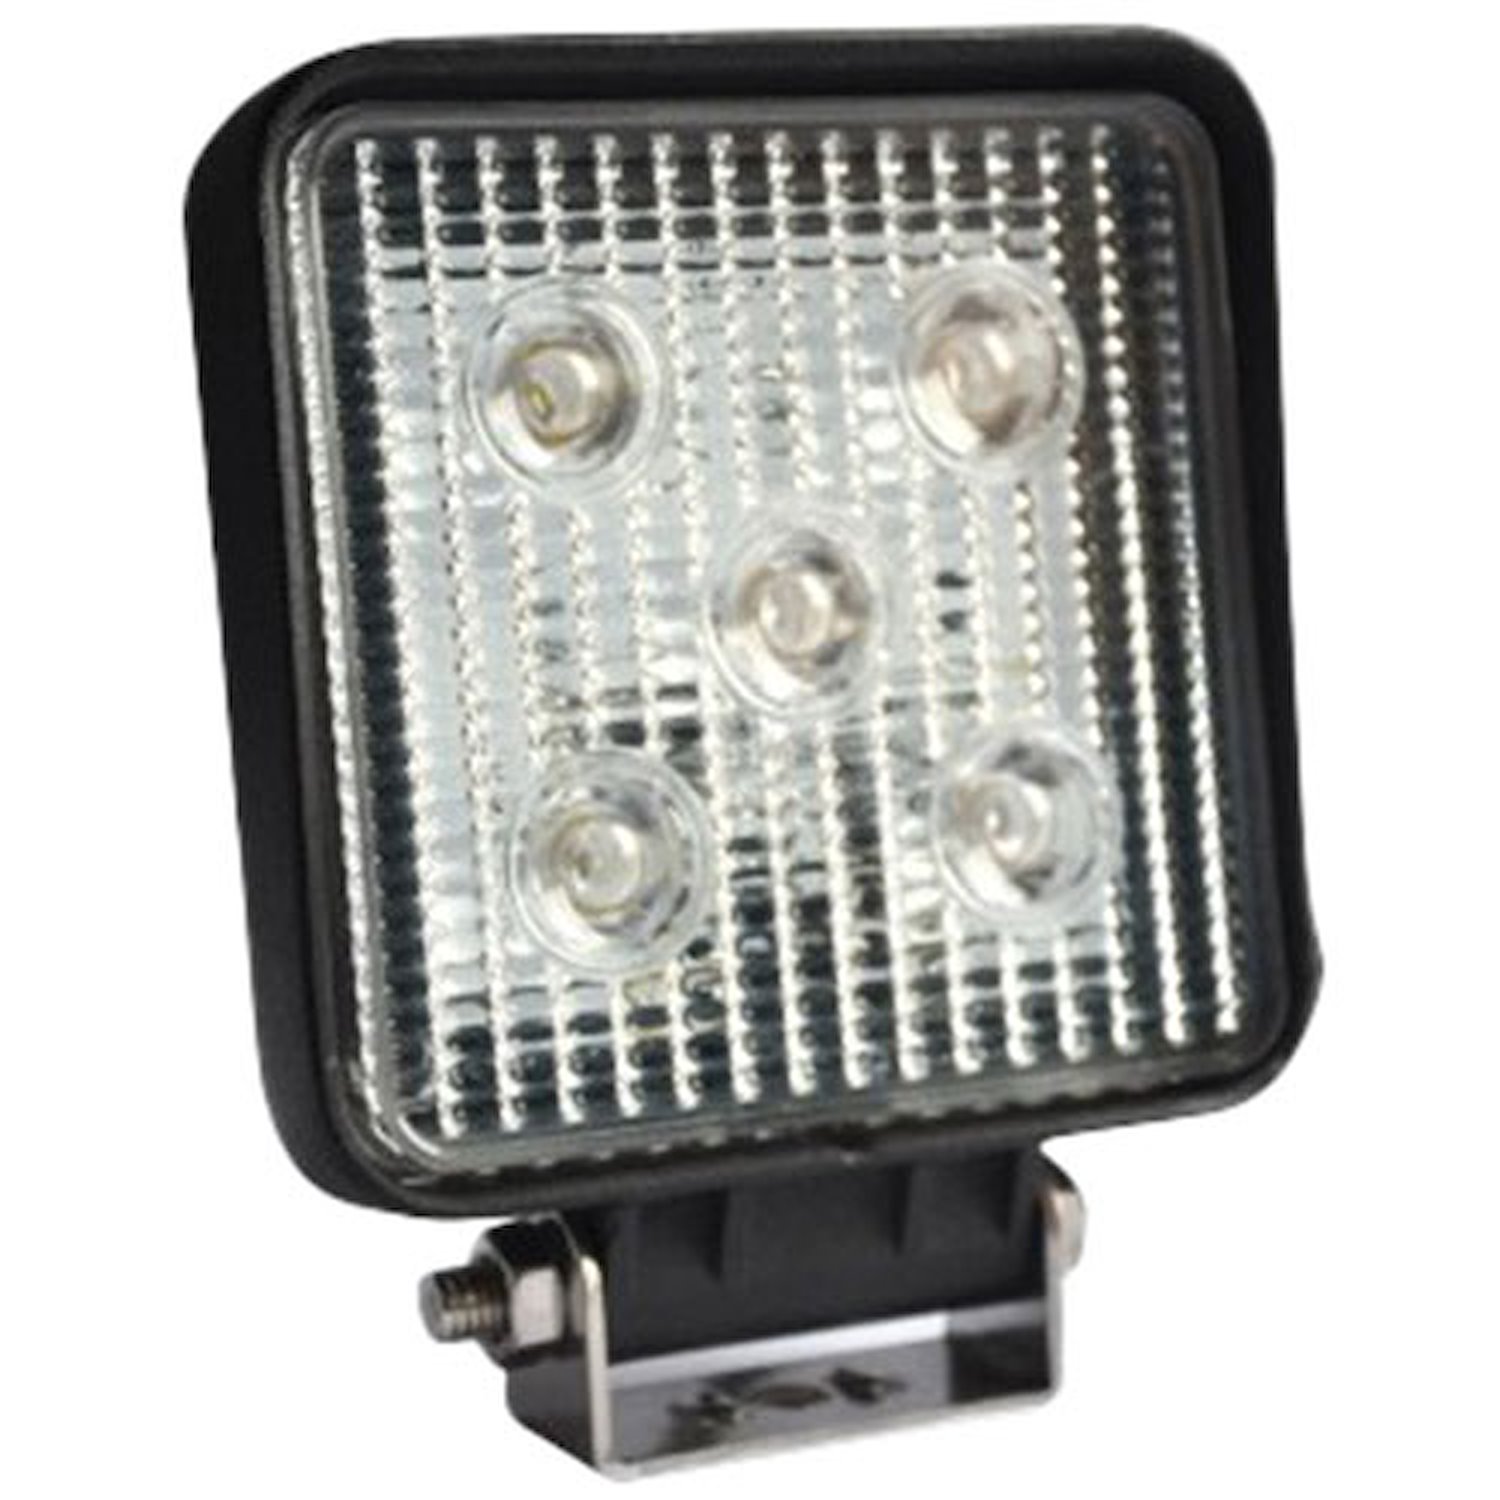 LED Utility Light 4.5" Square Case